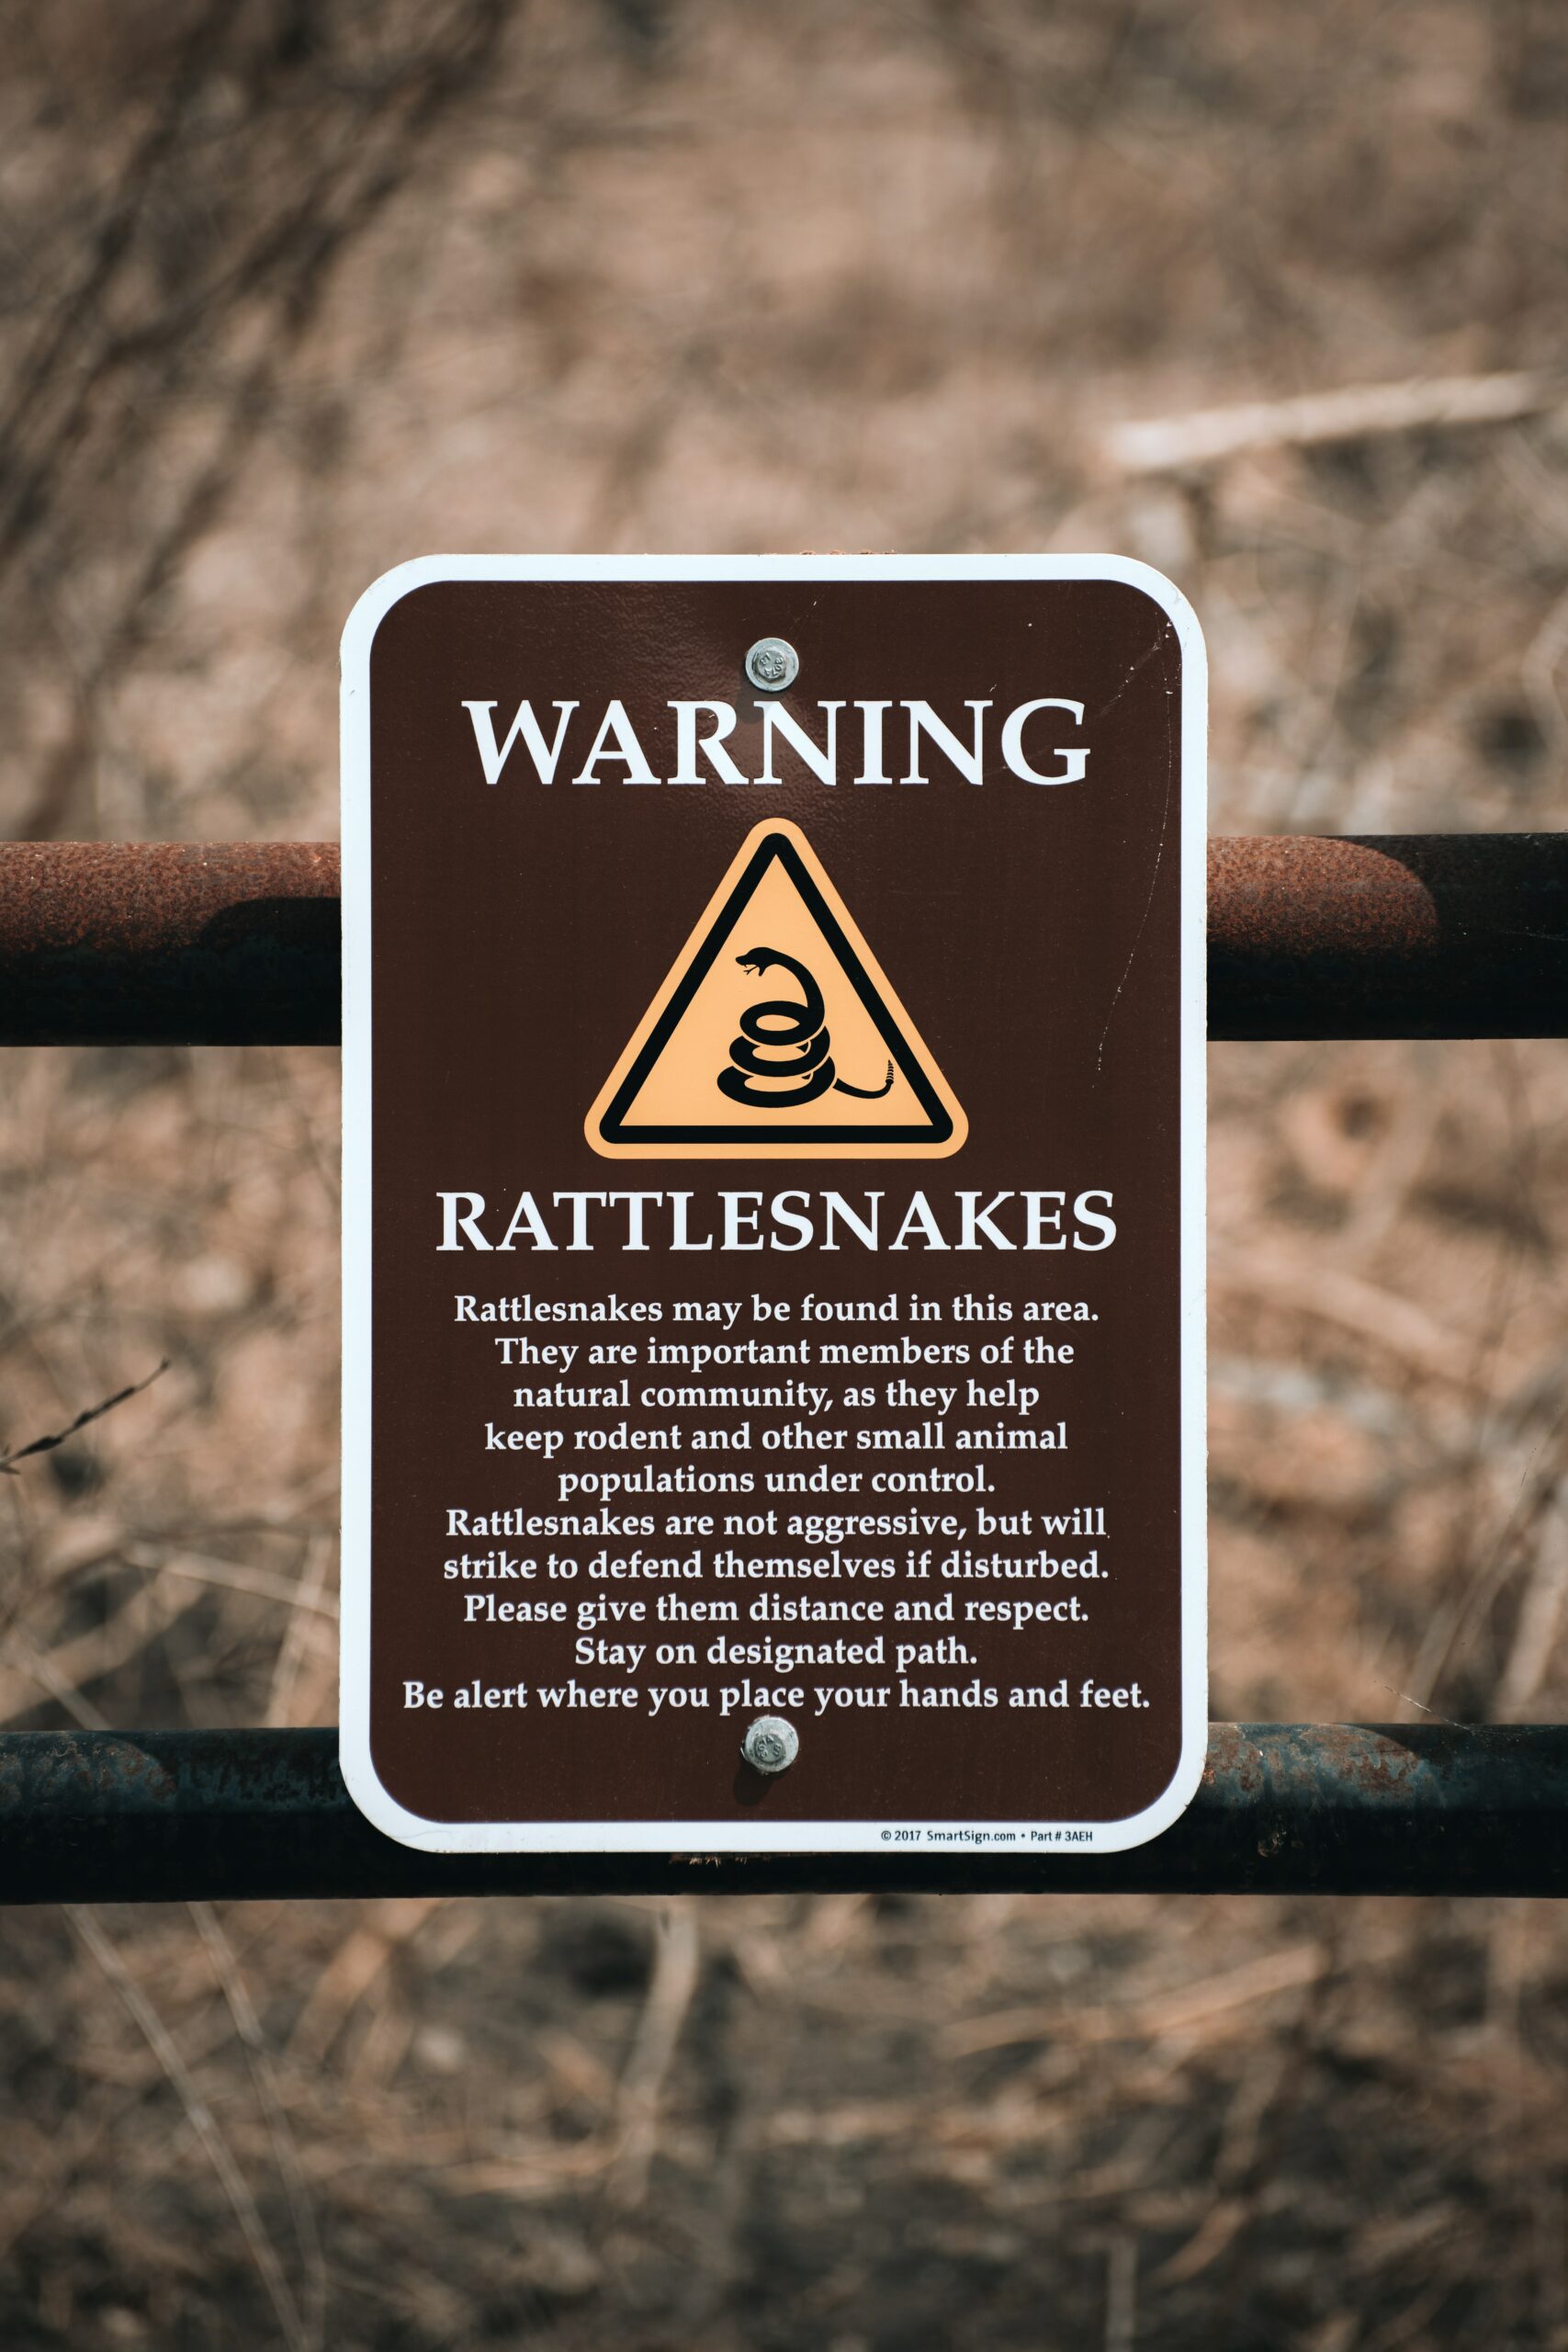 'Warning: Rattlesnakes' sign